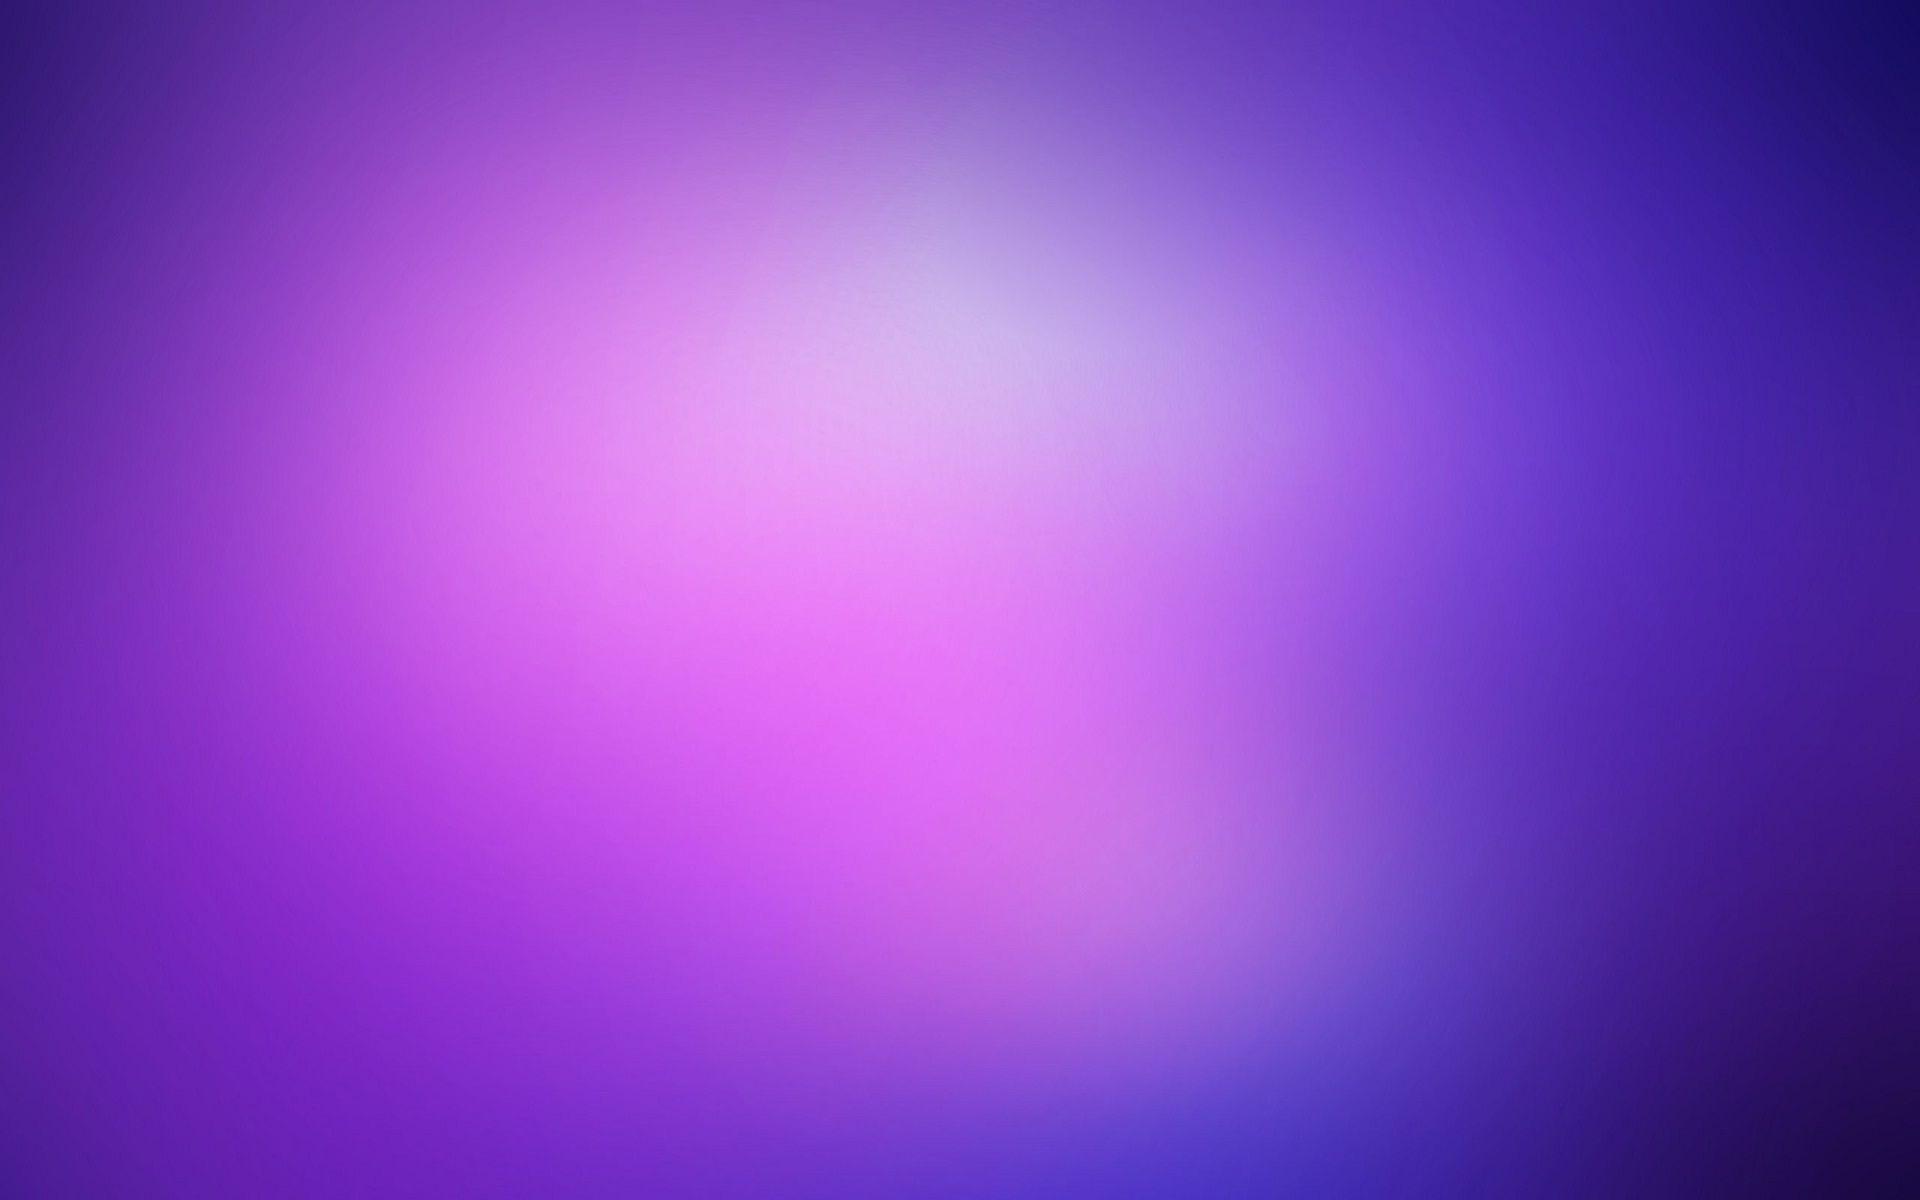 Shine blue and purple simple background. HD Wallpaper Rocks